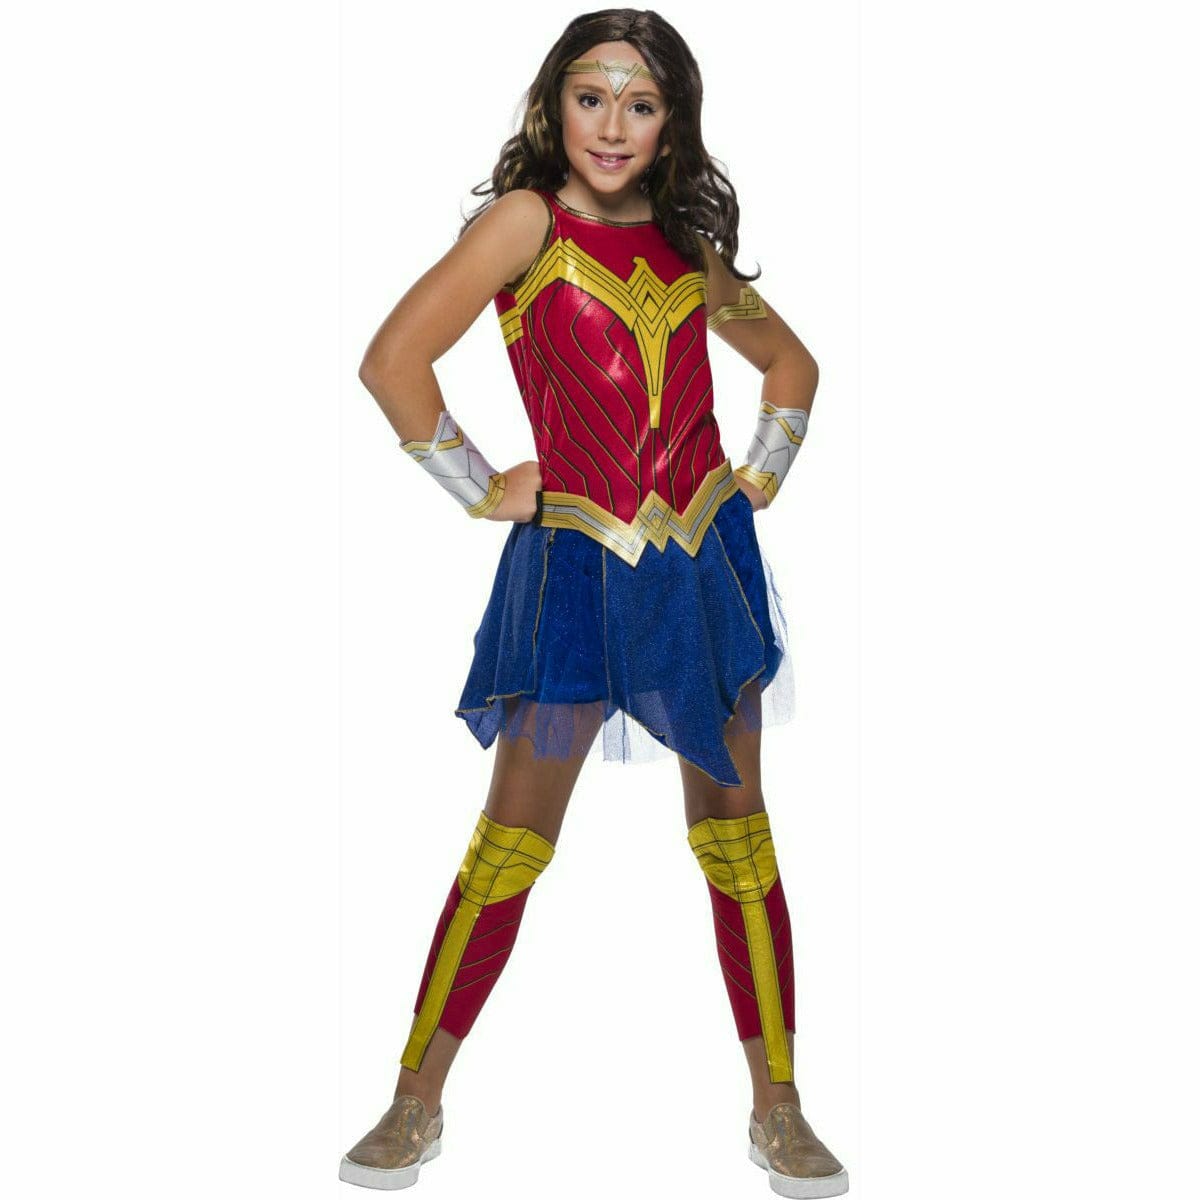 Rubies COSTUMES Small Kids Wonder Woman Deluxe Costume - Wonder Woman 1984